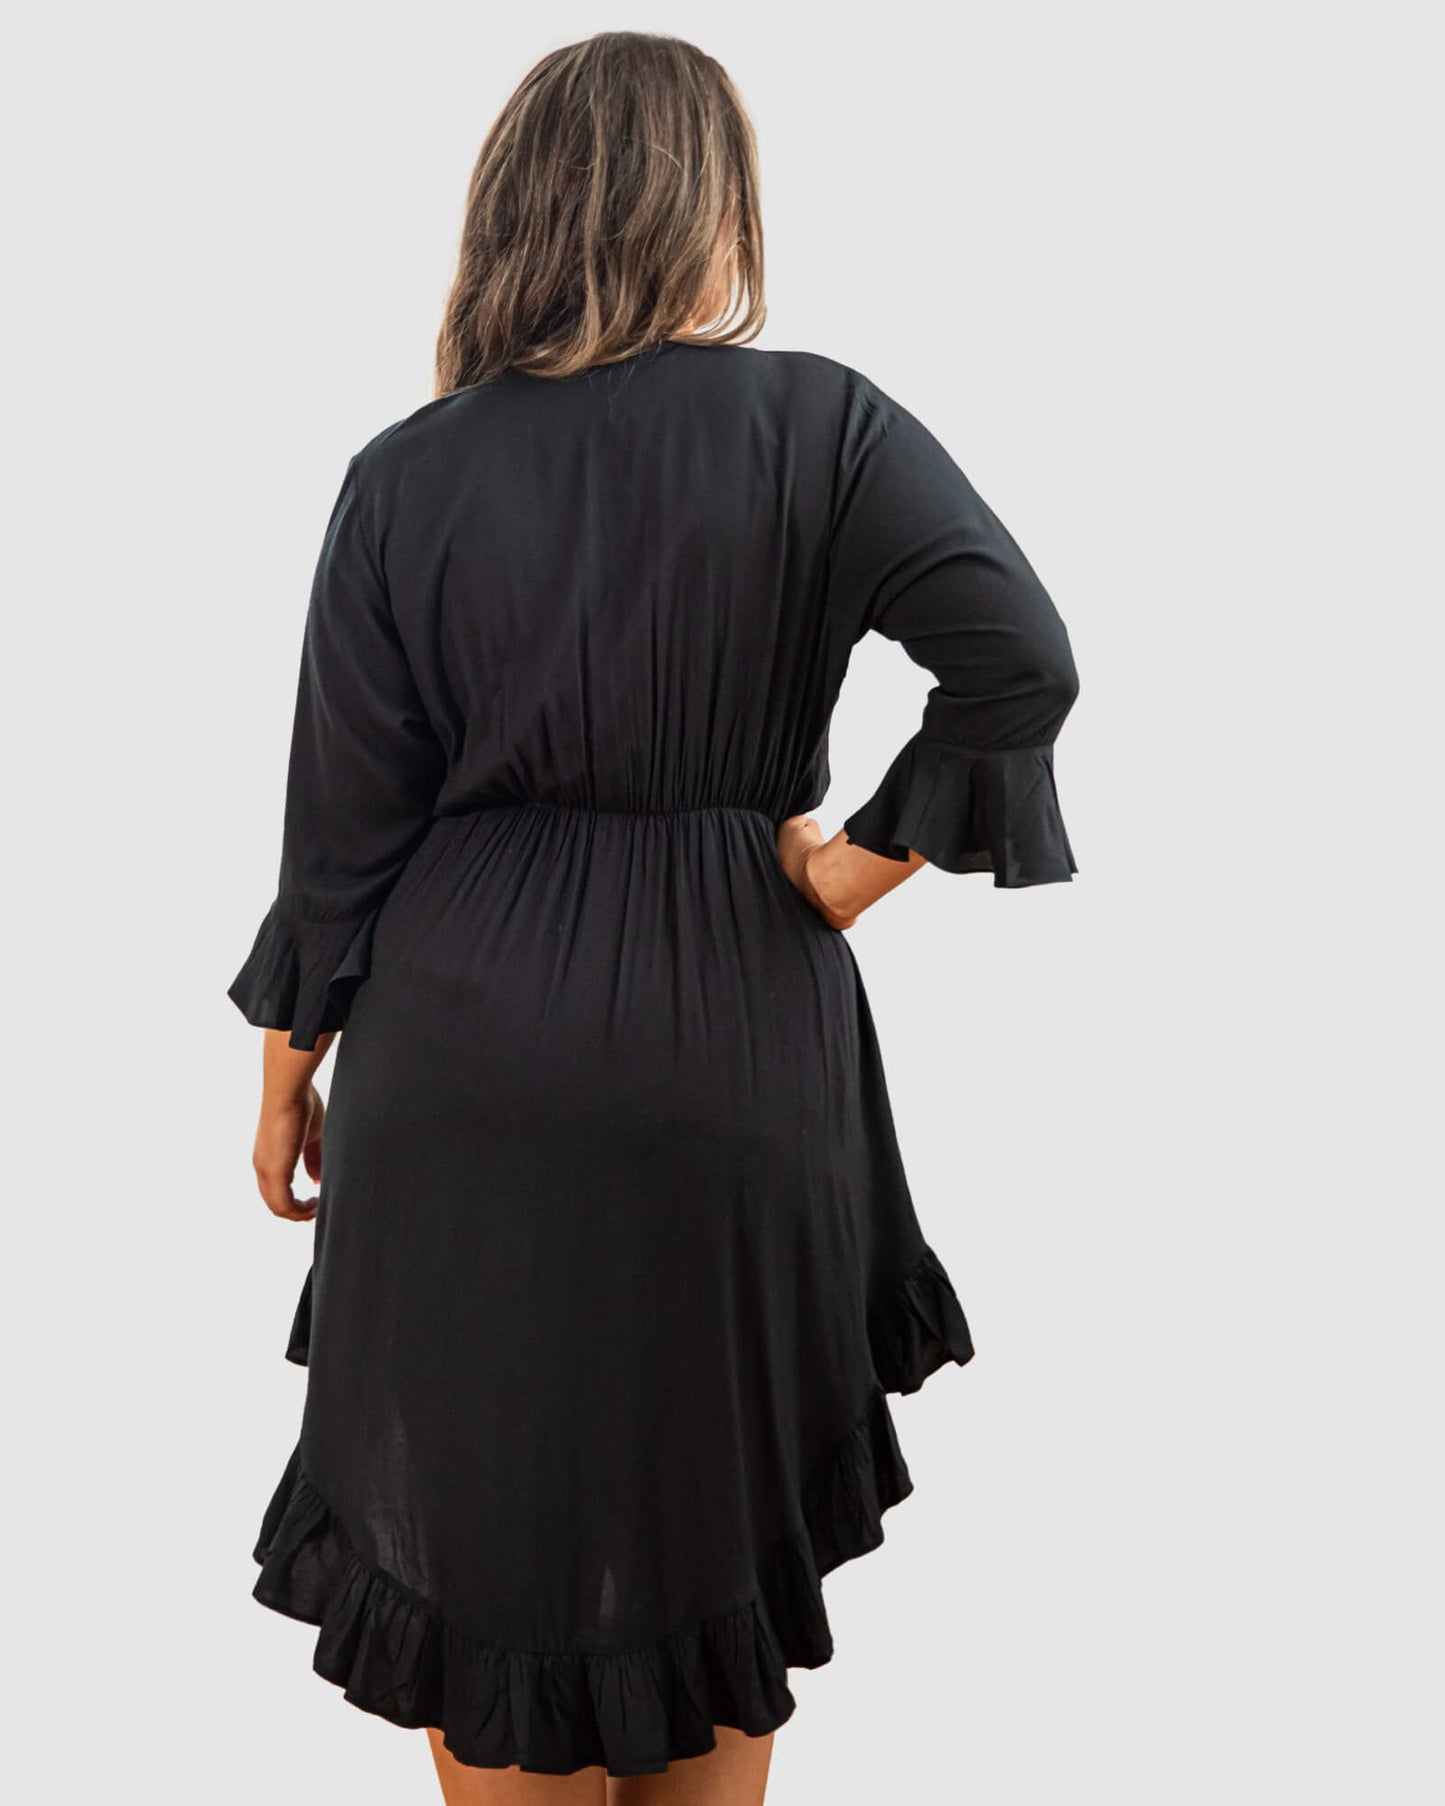 Arielle Tie Front Midi Dress in Black